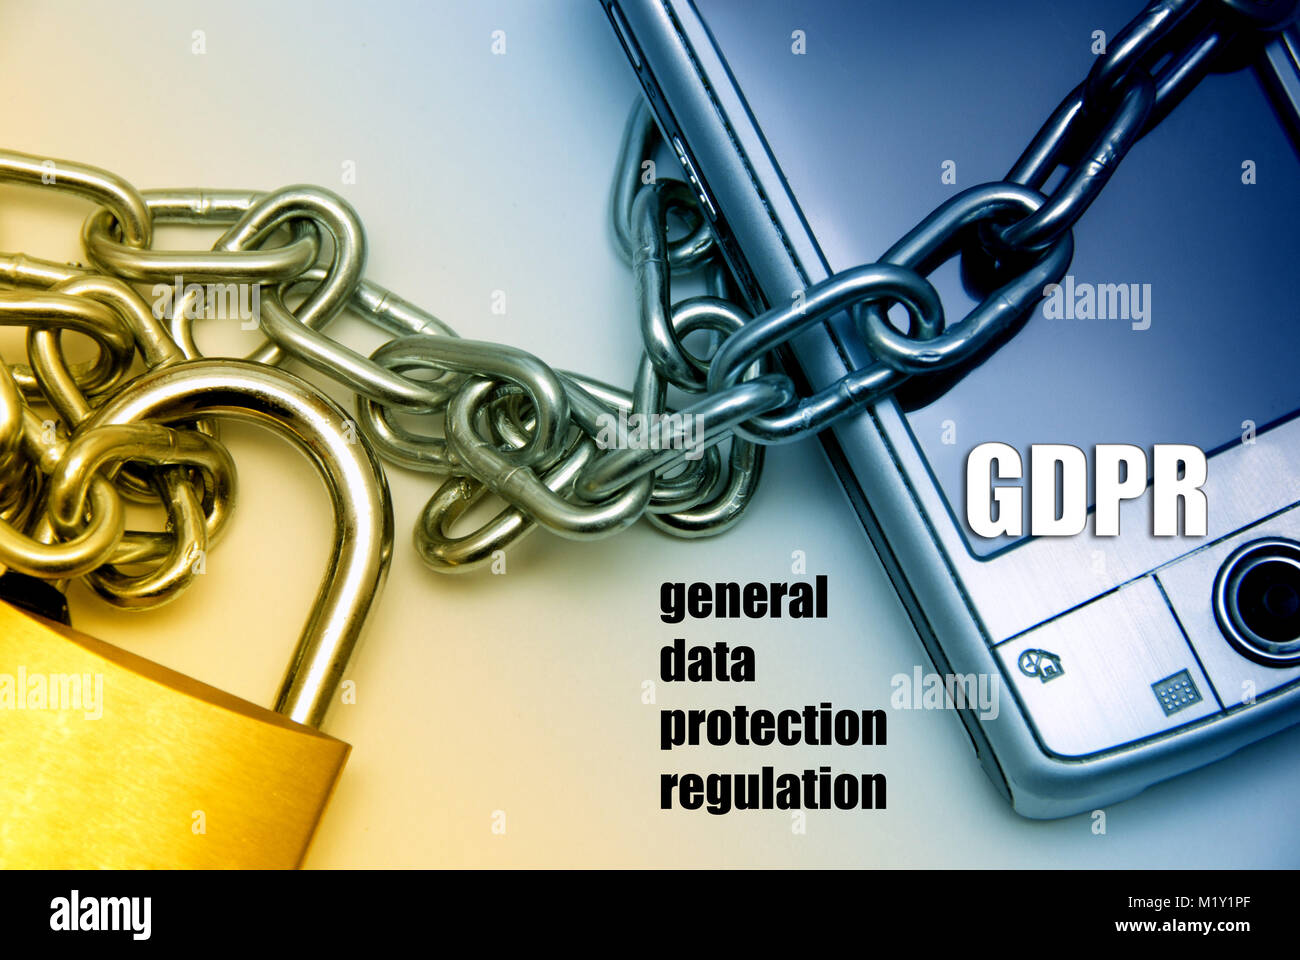 General Data Protection Regulation - GDPR Stock Photo